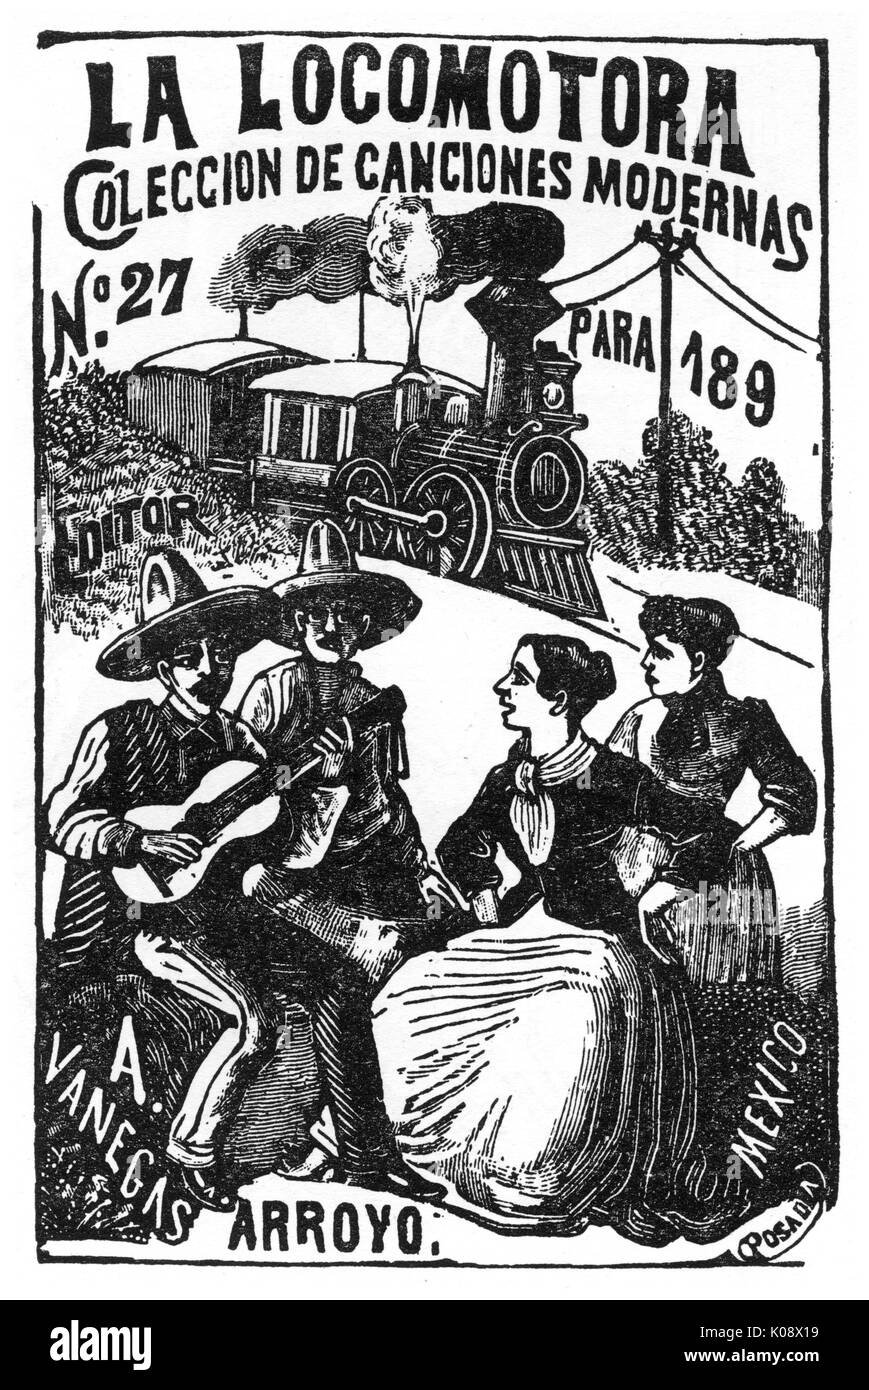 Music cover, La Locomotora -- The Locomotive, collection of modern songs, published by Arsacio Vanegas Arroyo.      Date: circa 1895 Stock Photo